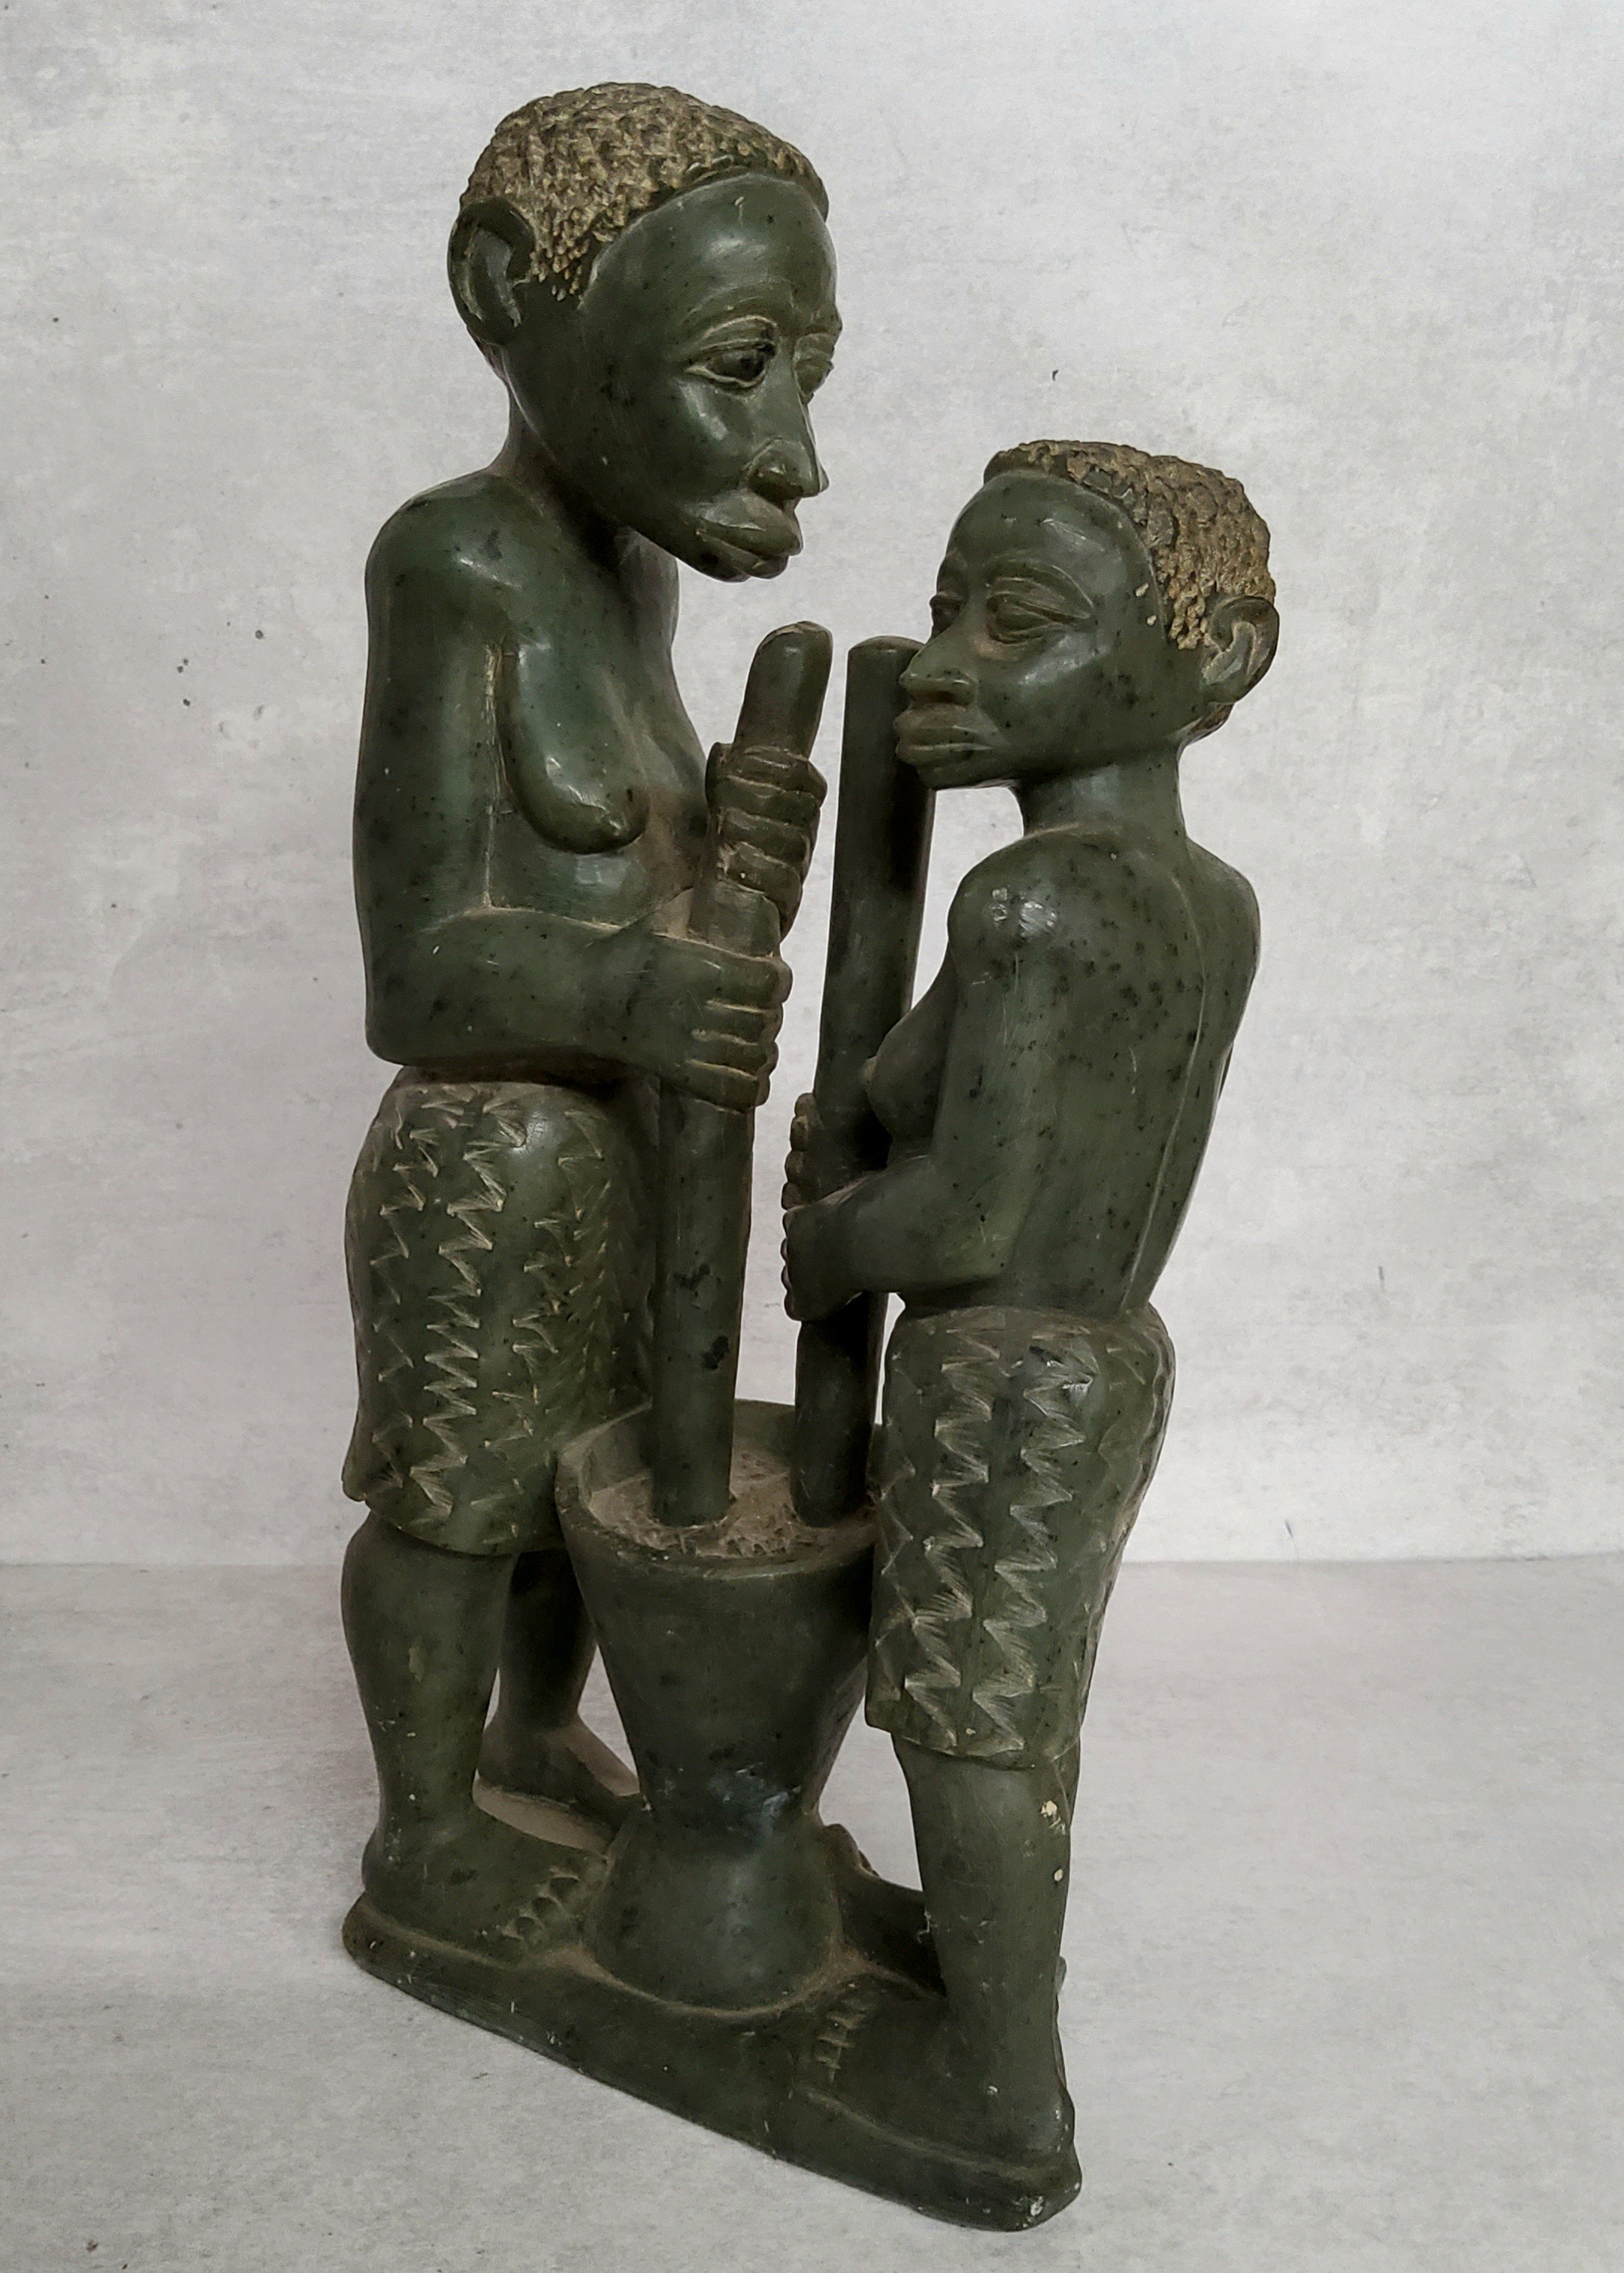 Lazarus Tandi, Zimbabwe, African 20th century. A verdite stone carved sculpture grinding sorghum.